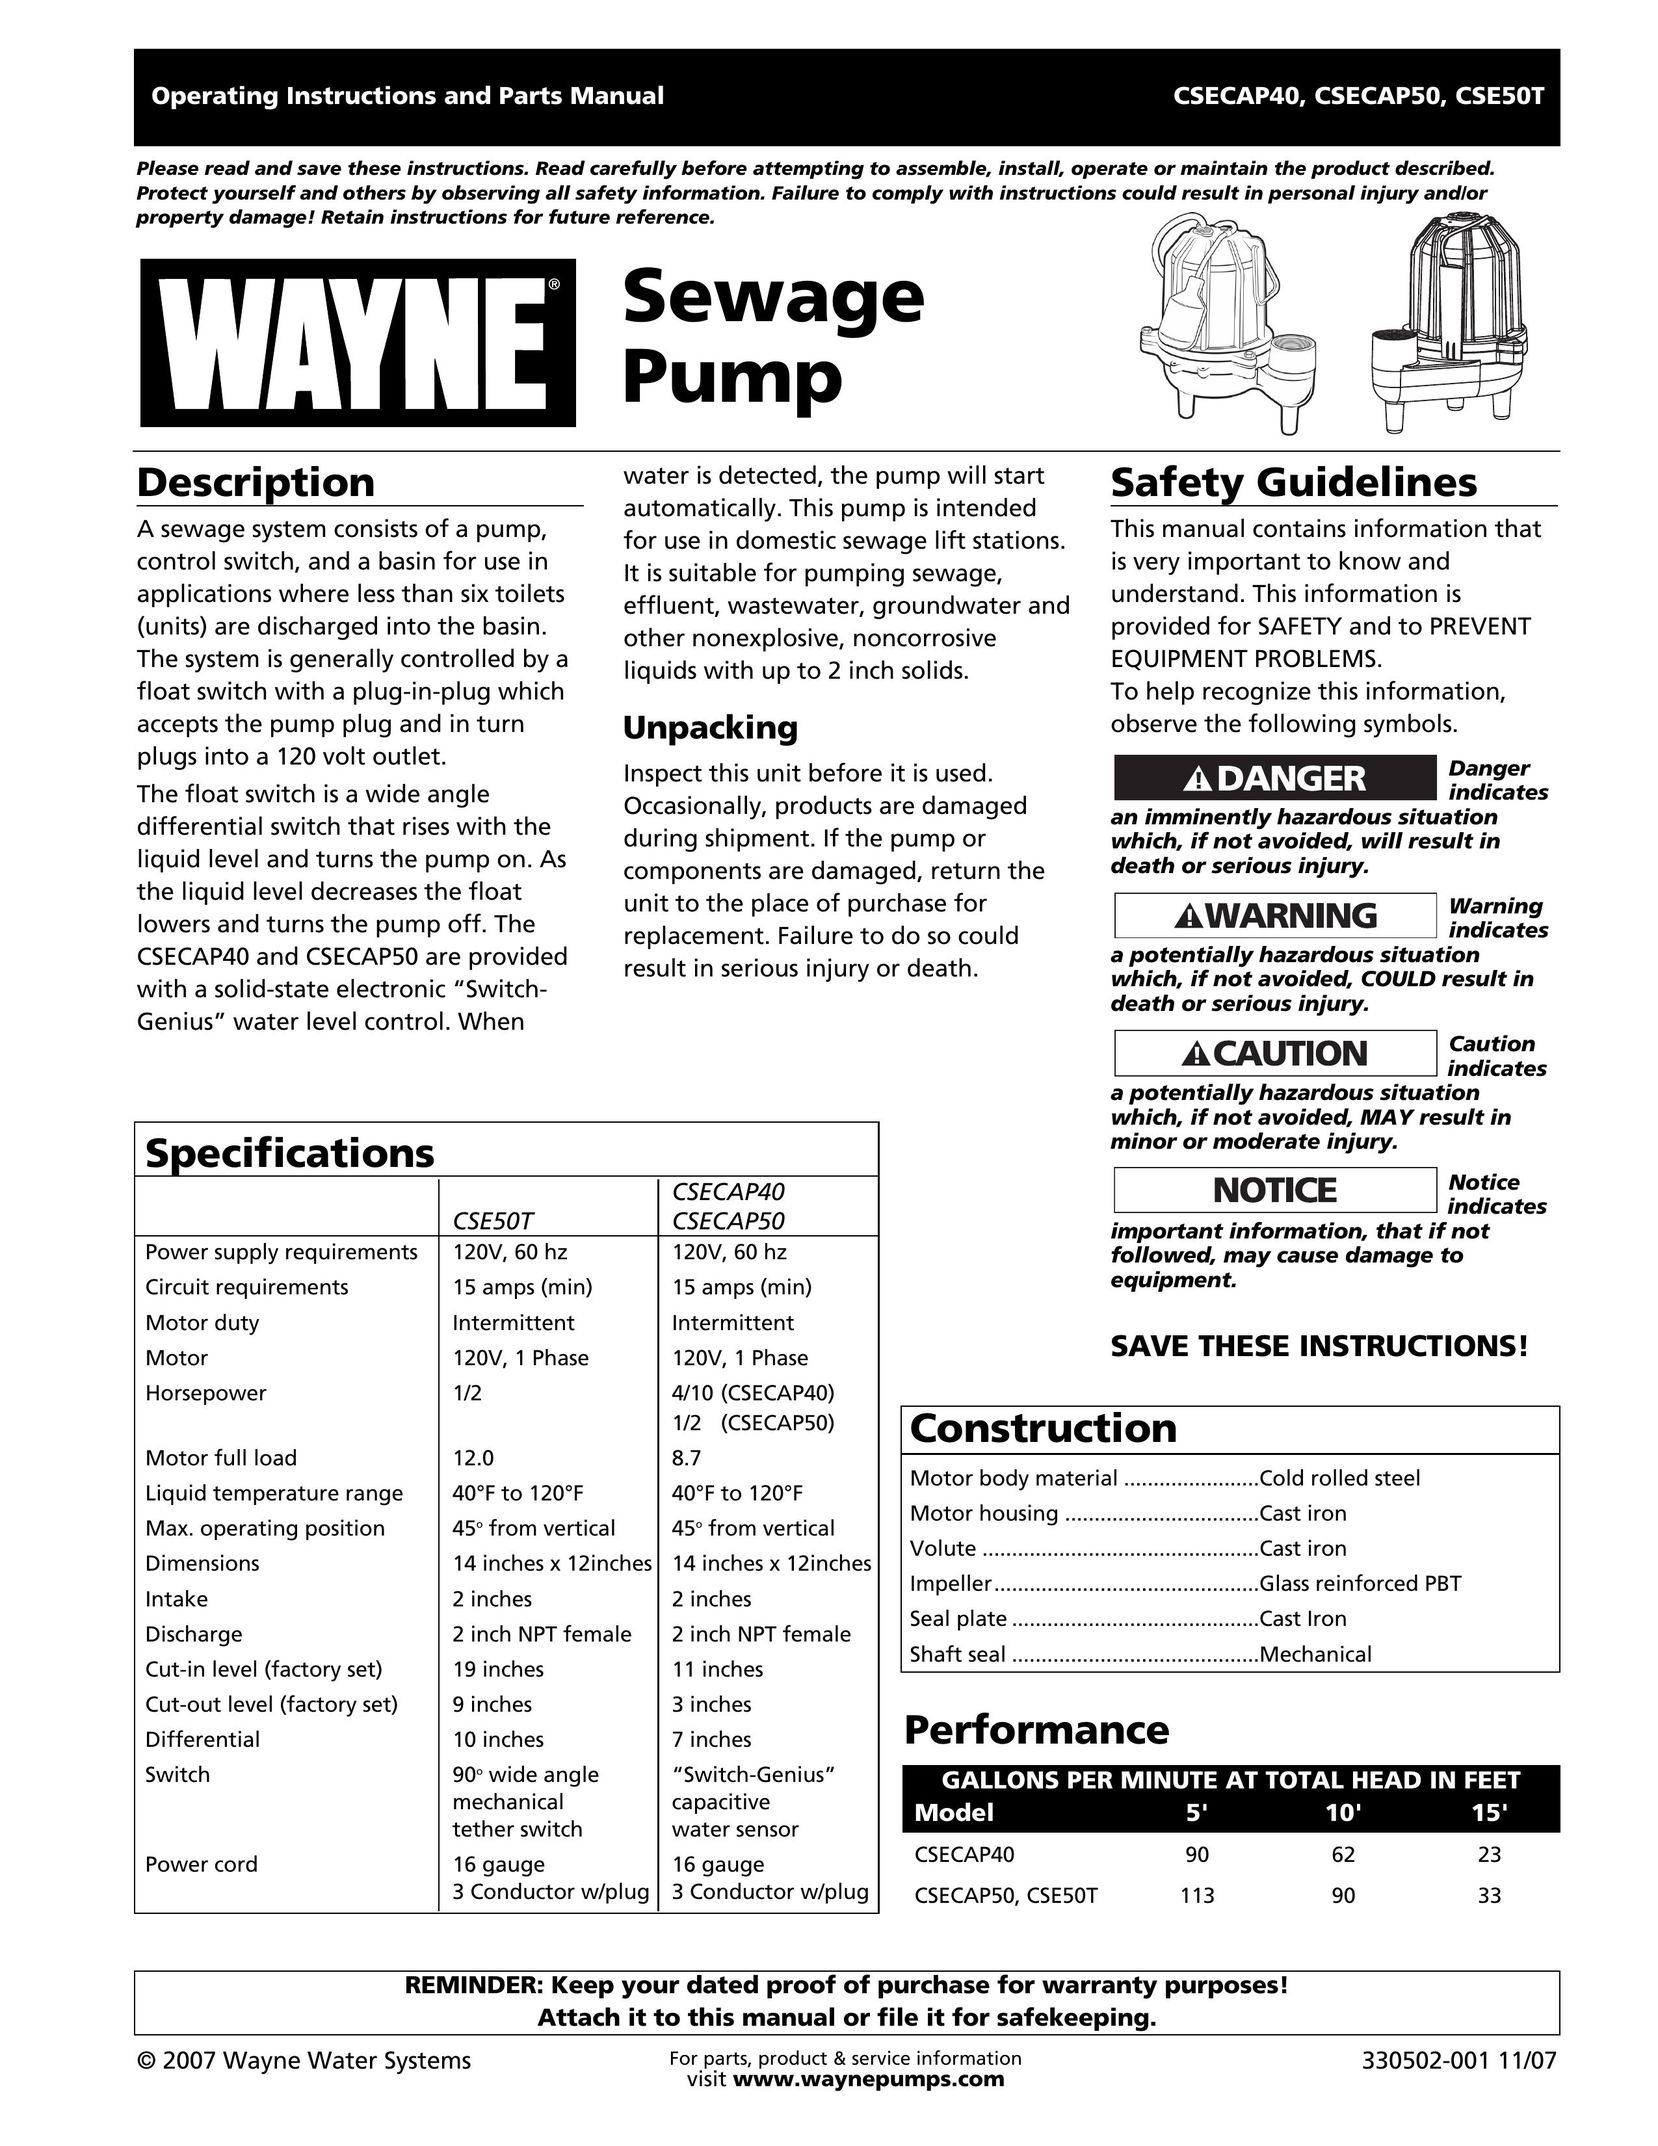 Wayne CSECAP40 Septic System User Manual